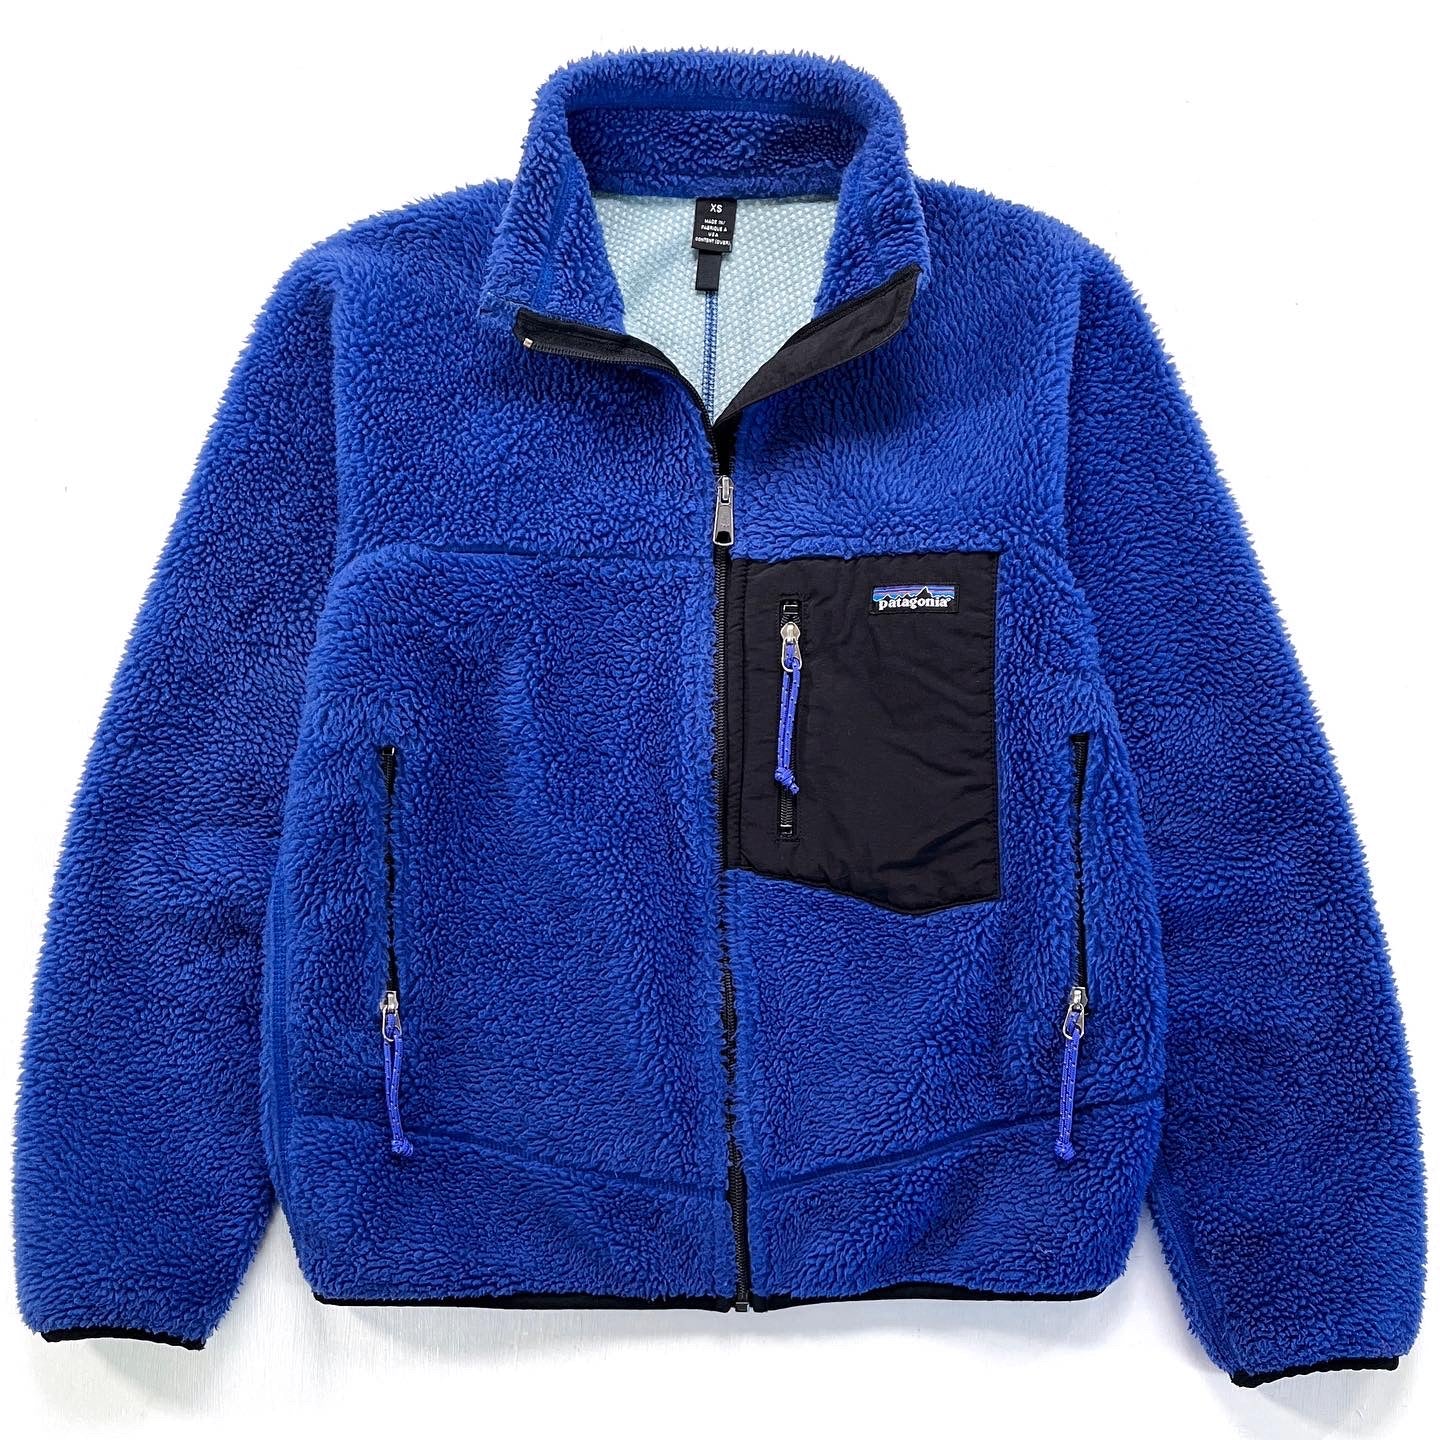 1998 Patagonia Classic Retro-X Jacket, Blue Ribbon & Black (S)